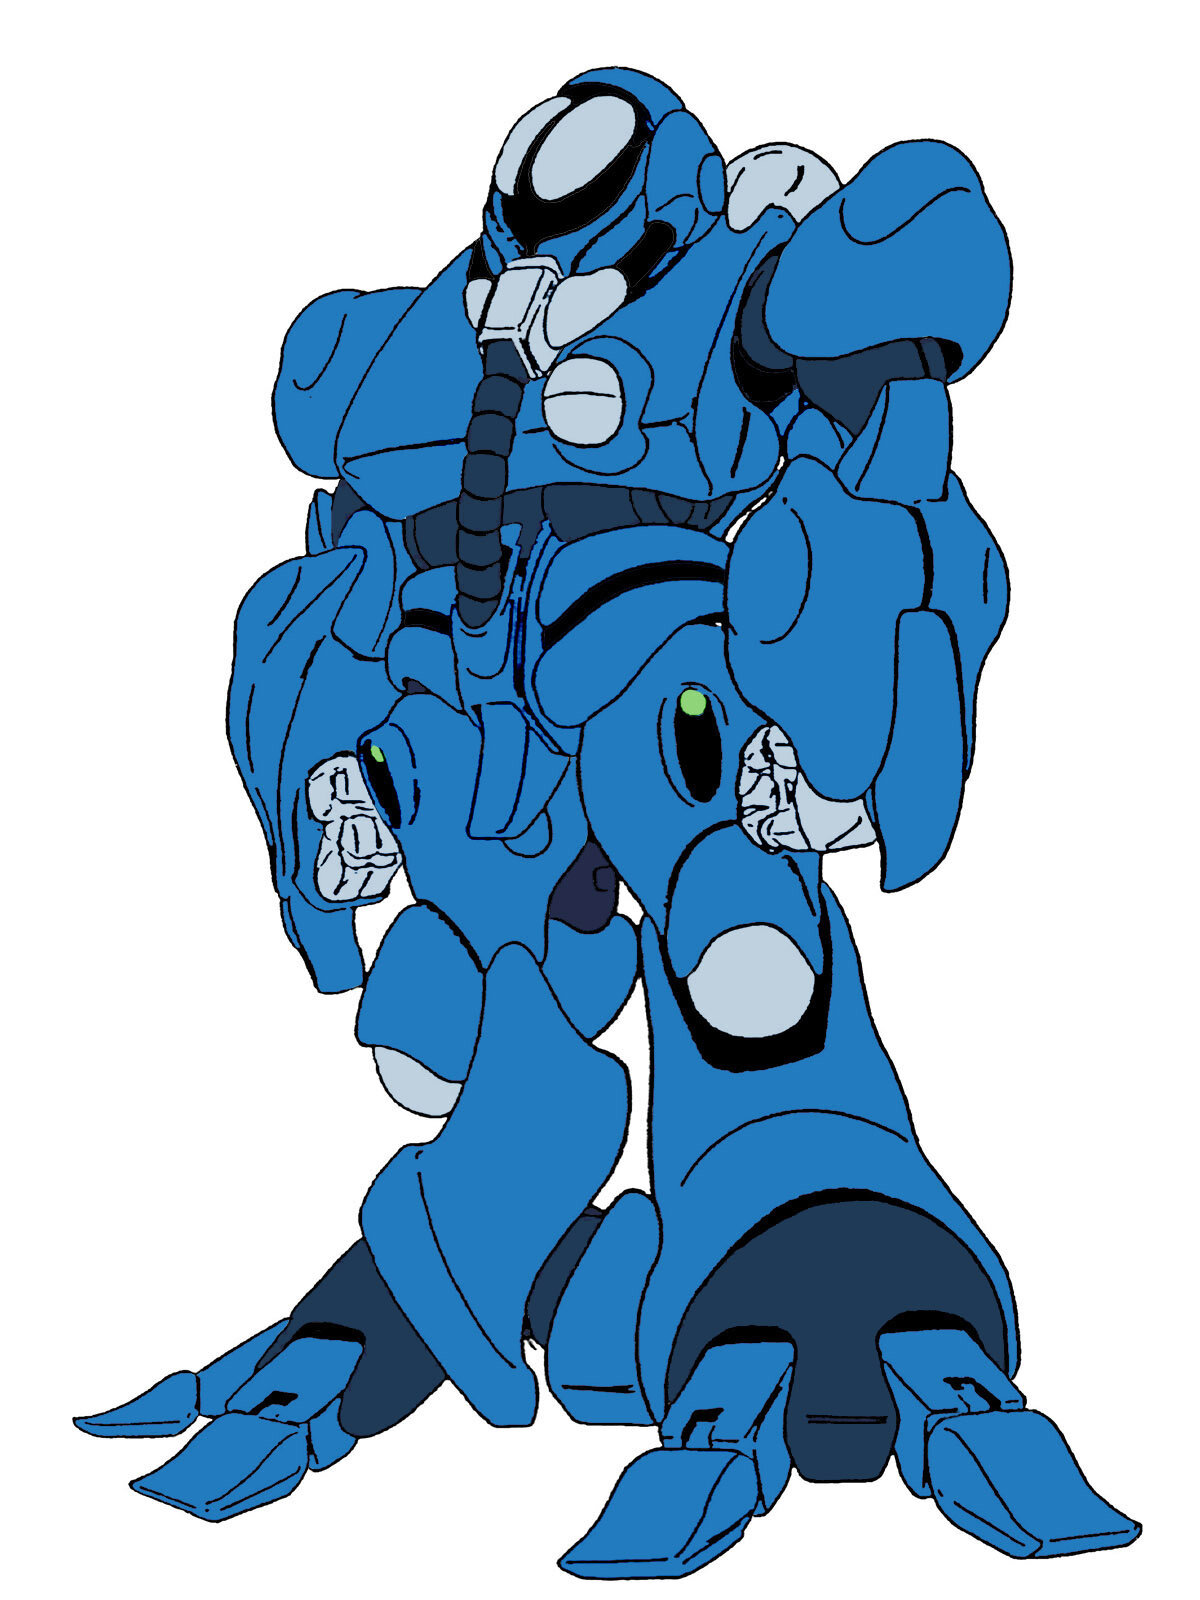 Bioroid-Soldier-Blue-TBr-I-Mk.I-Nousdohl-Warrior-1.jpg.cac2a3f2993556f4ed44787e1e9470e3.jpg